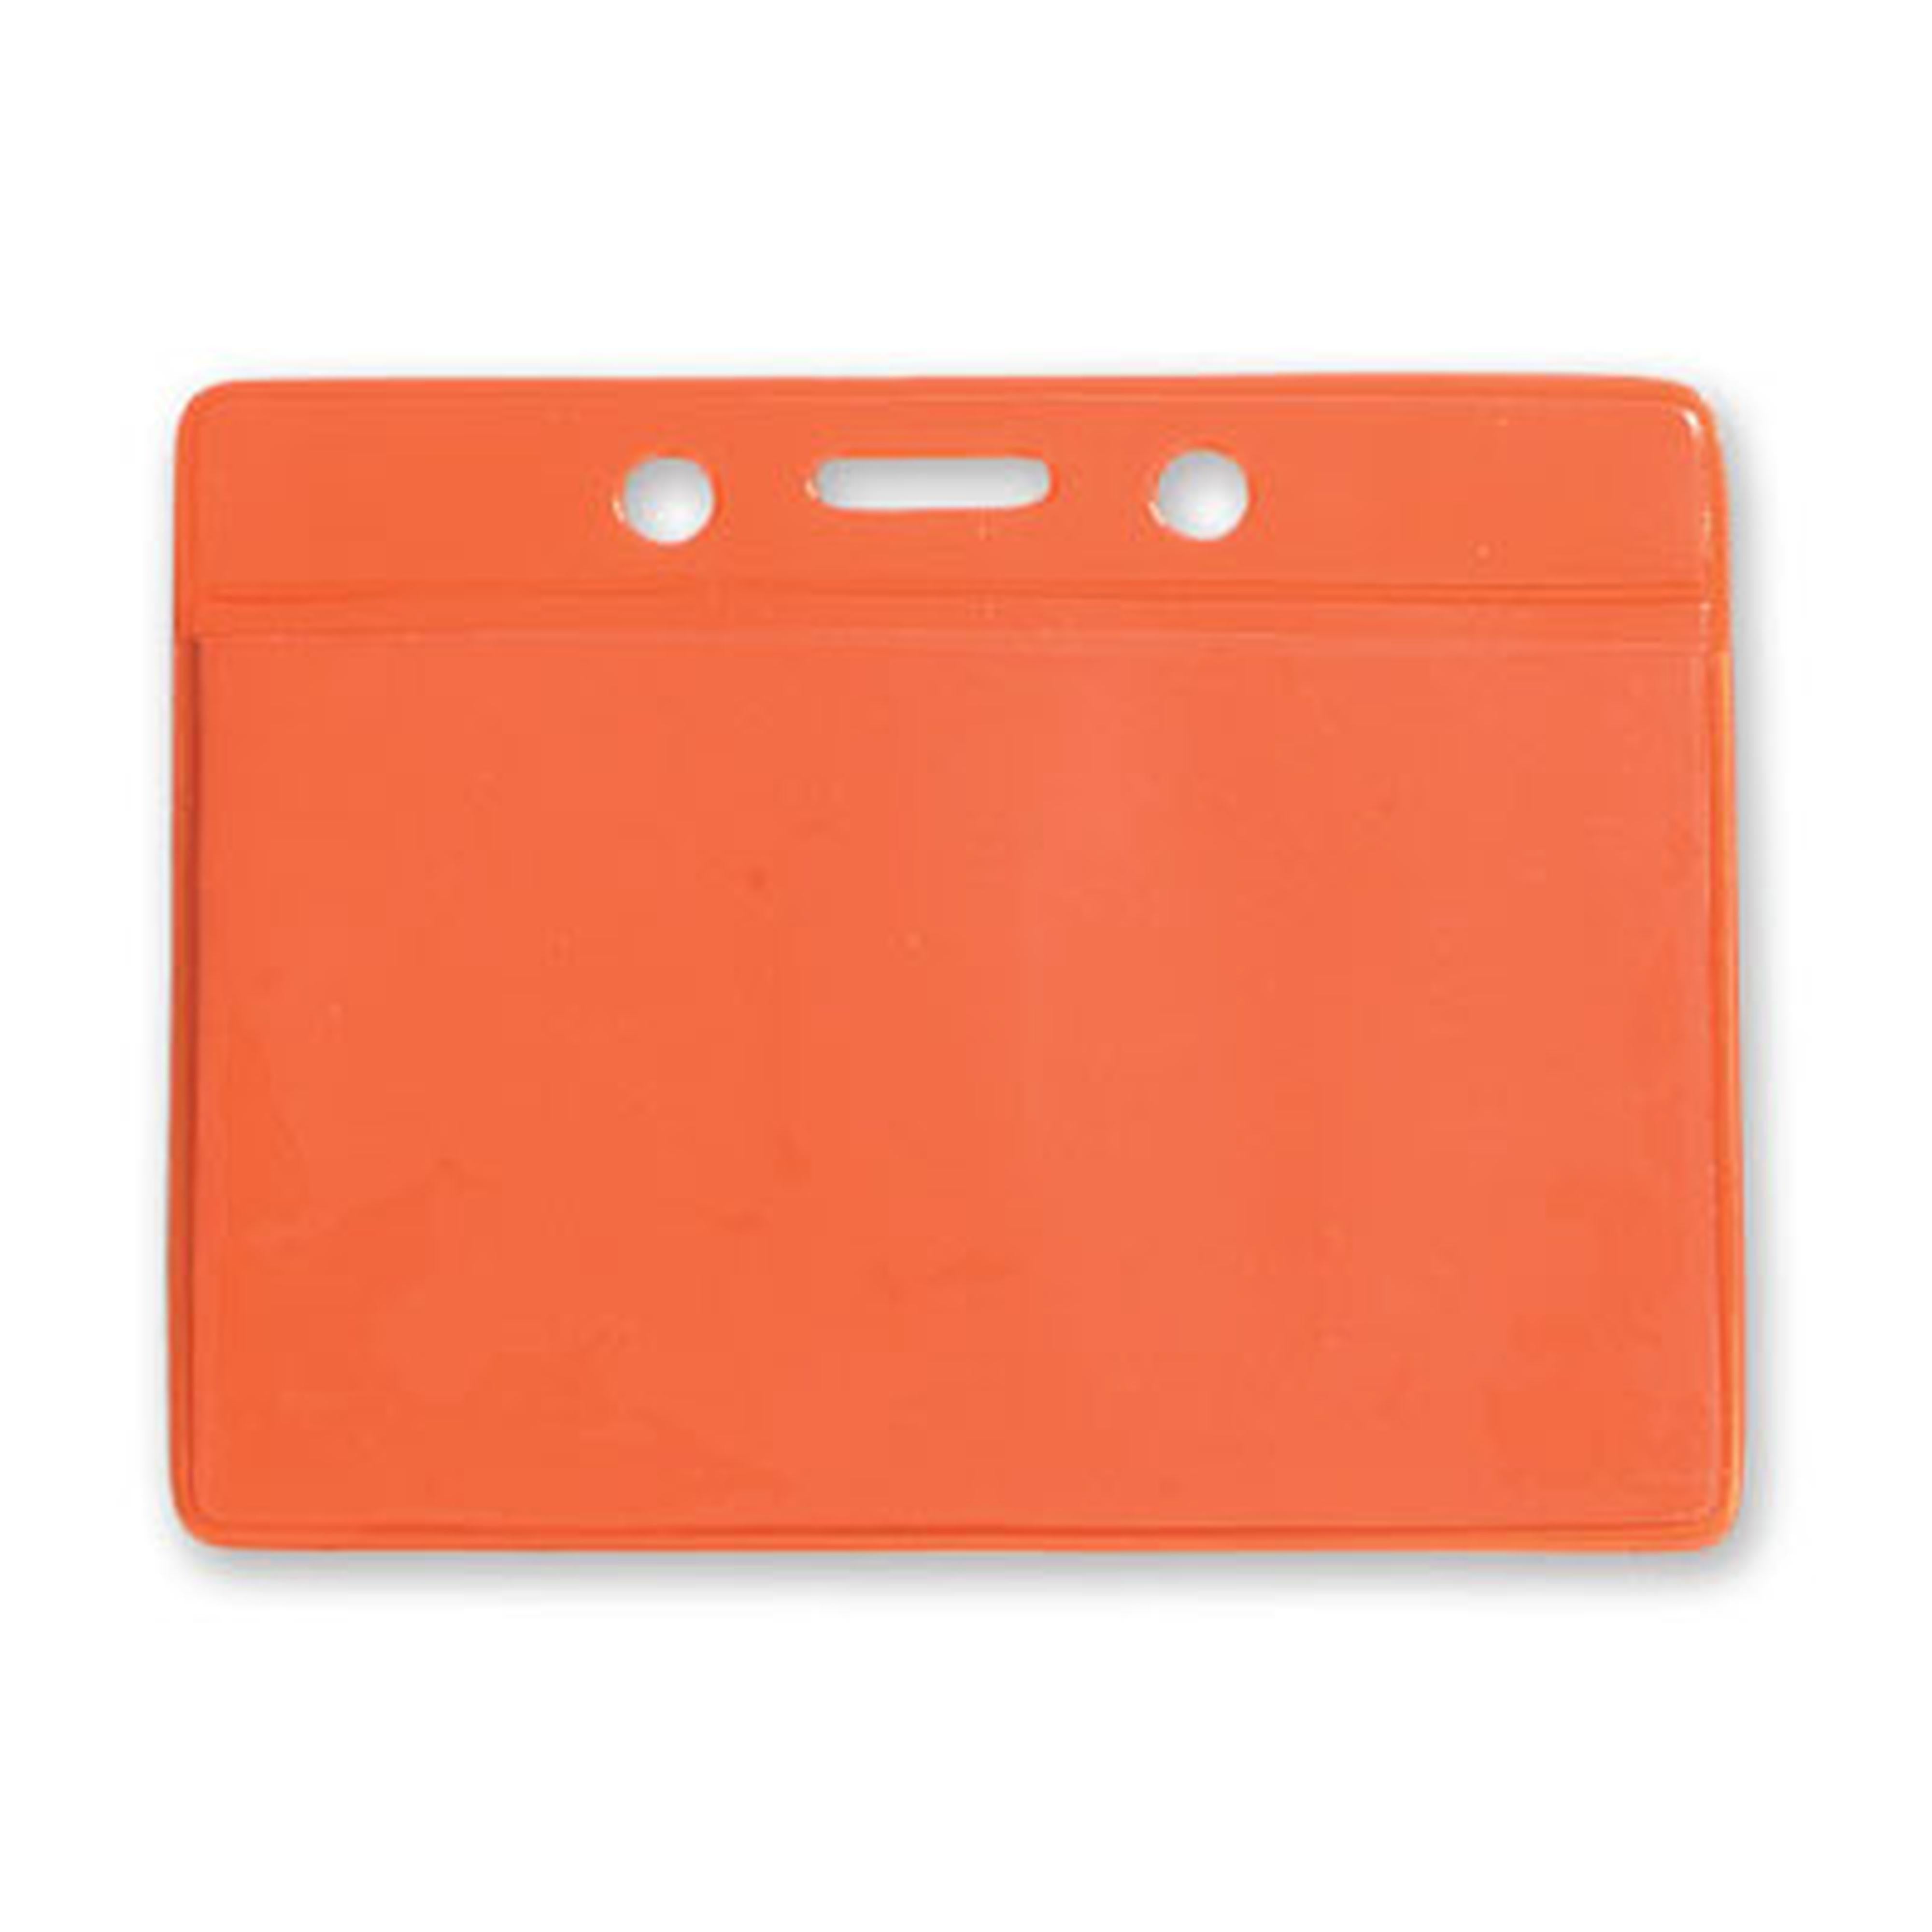 Clear Vinyl Horizontal Badge Holder with Orange Color Back, 3.5 x 2.13